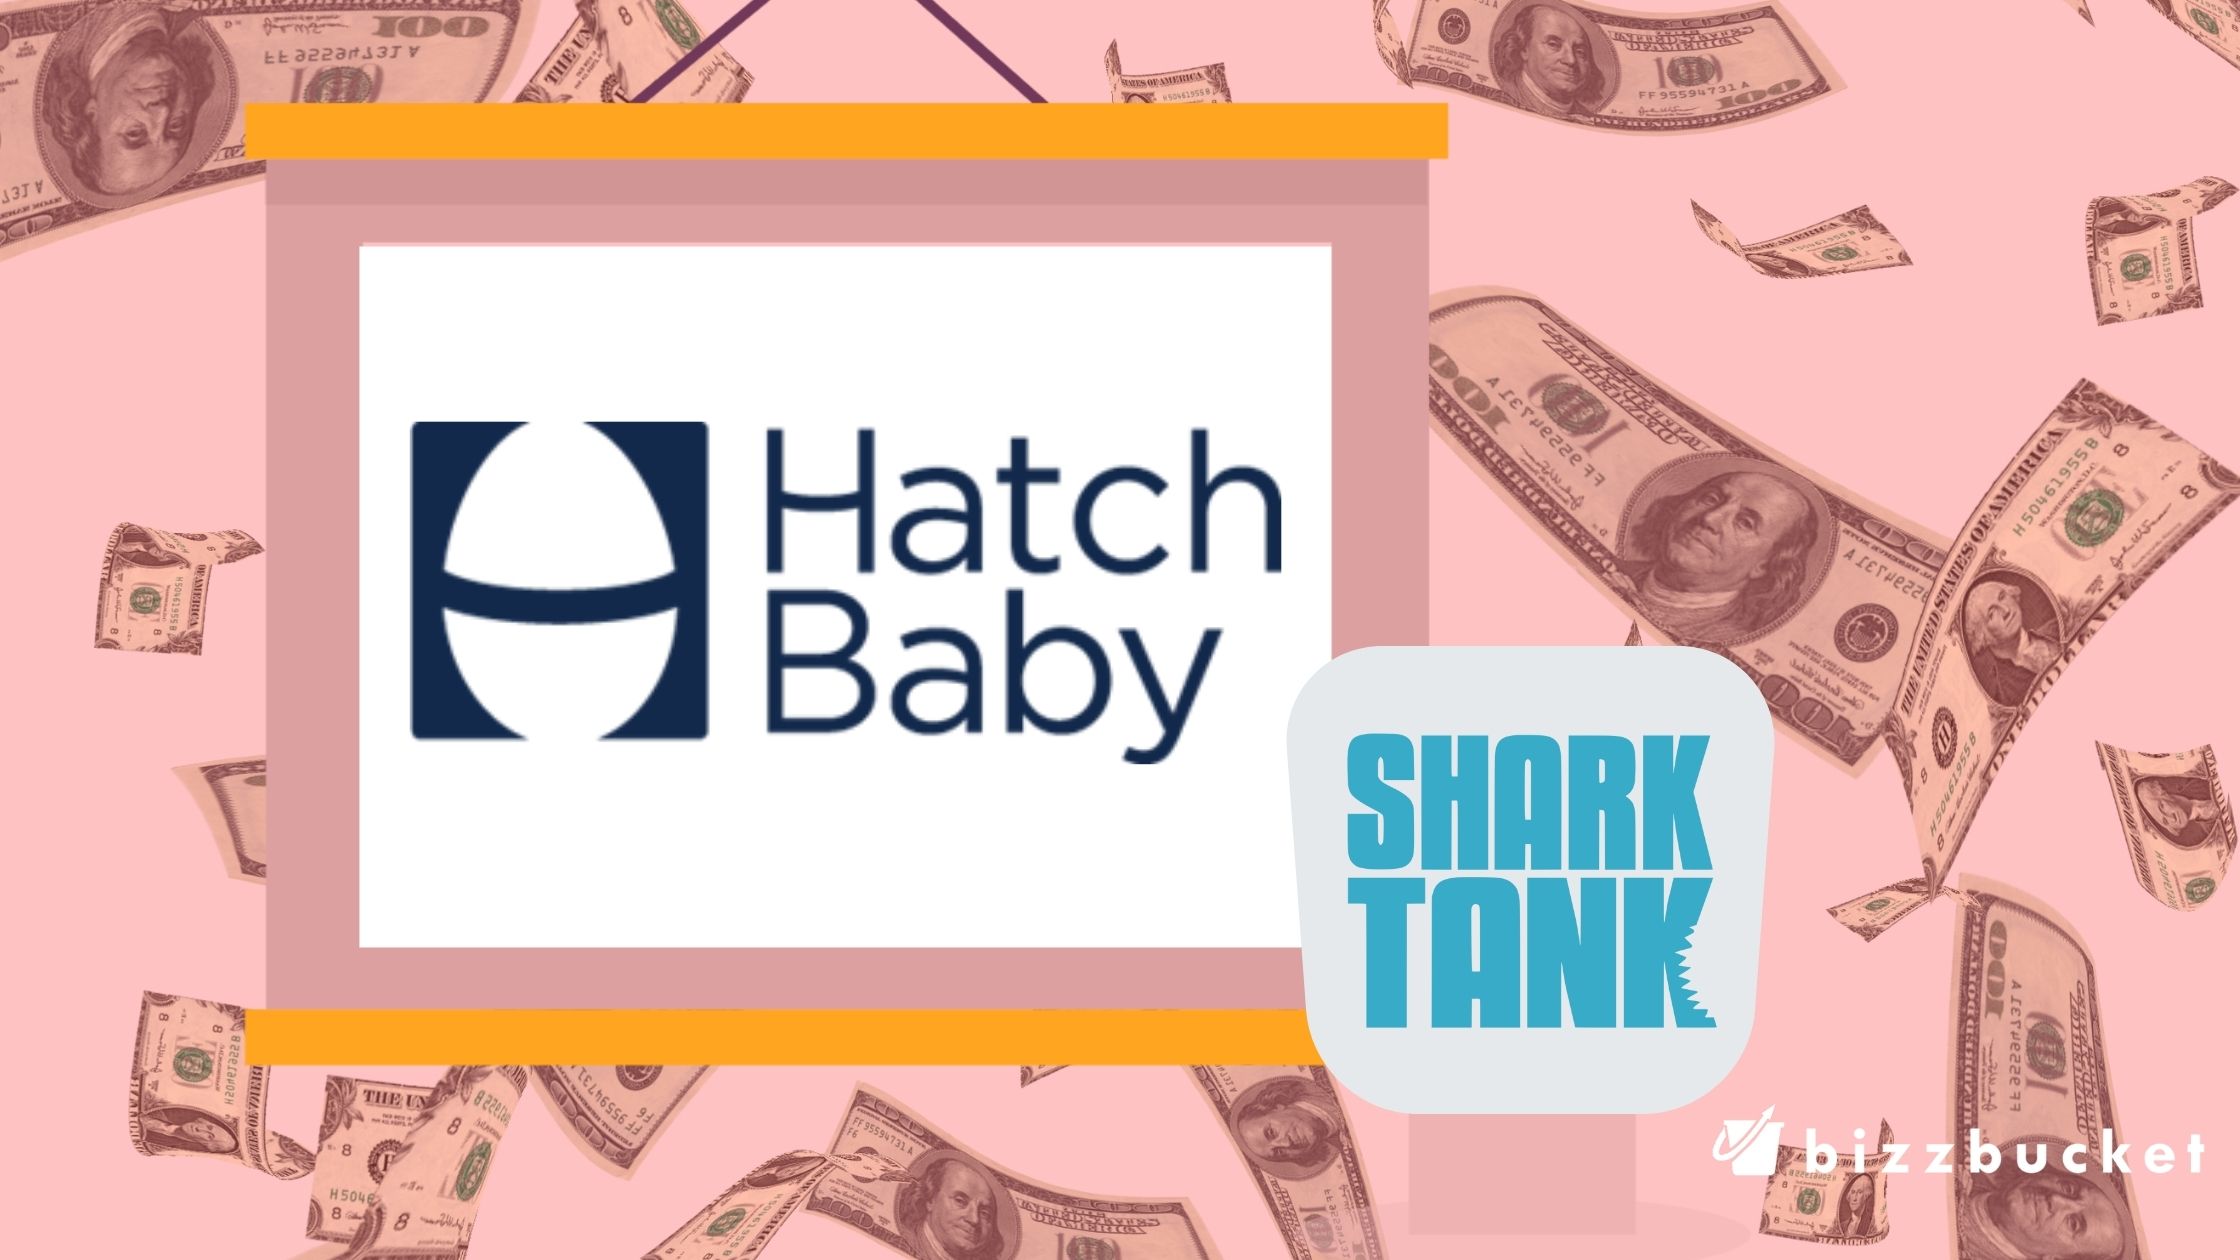 Hatch Baby shark tank update